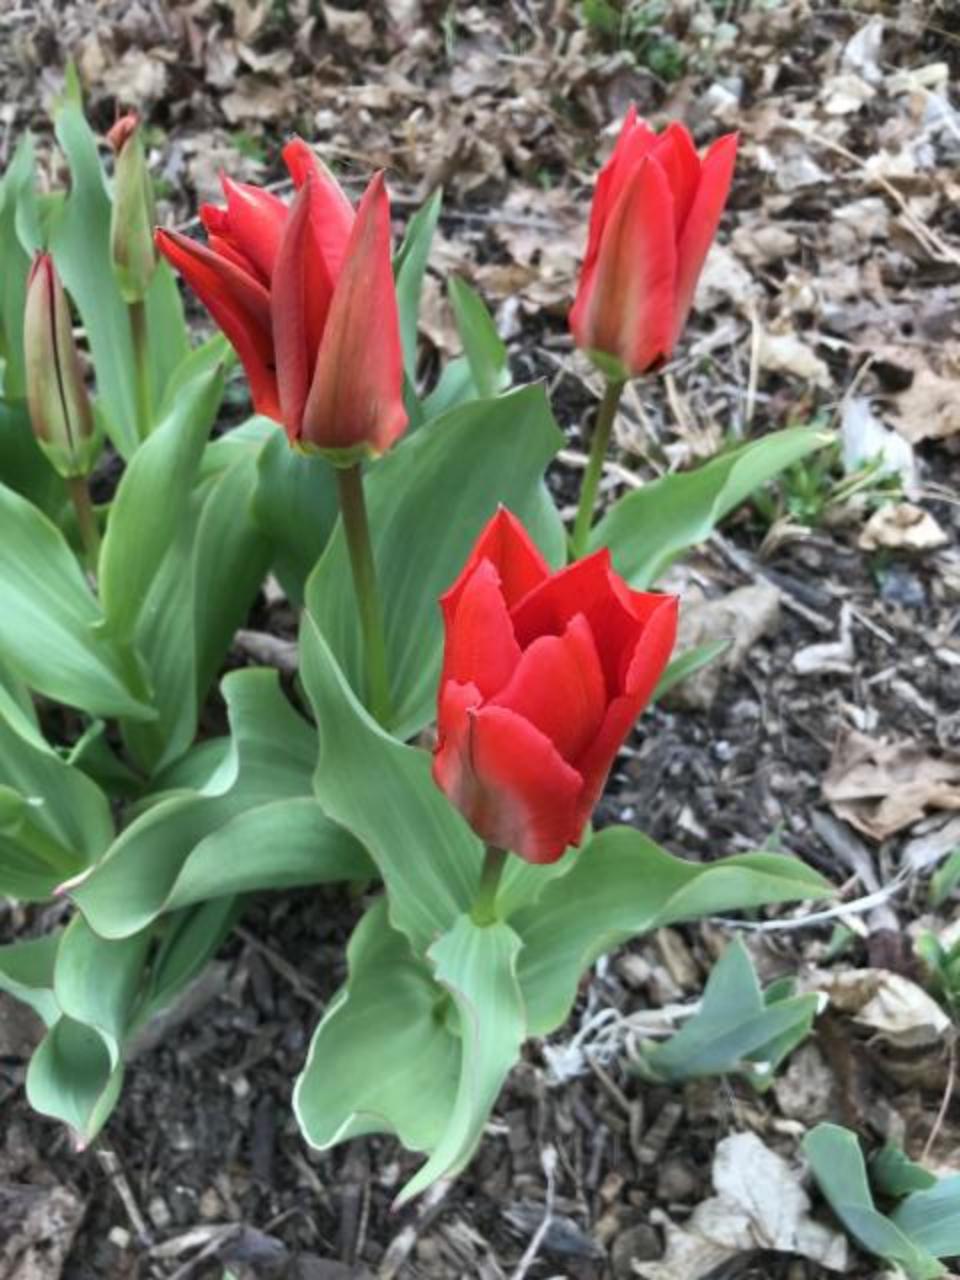 Tulips blooming in Ontario